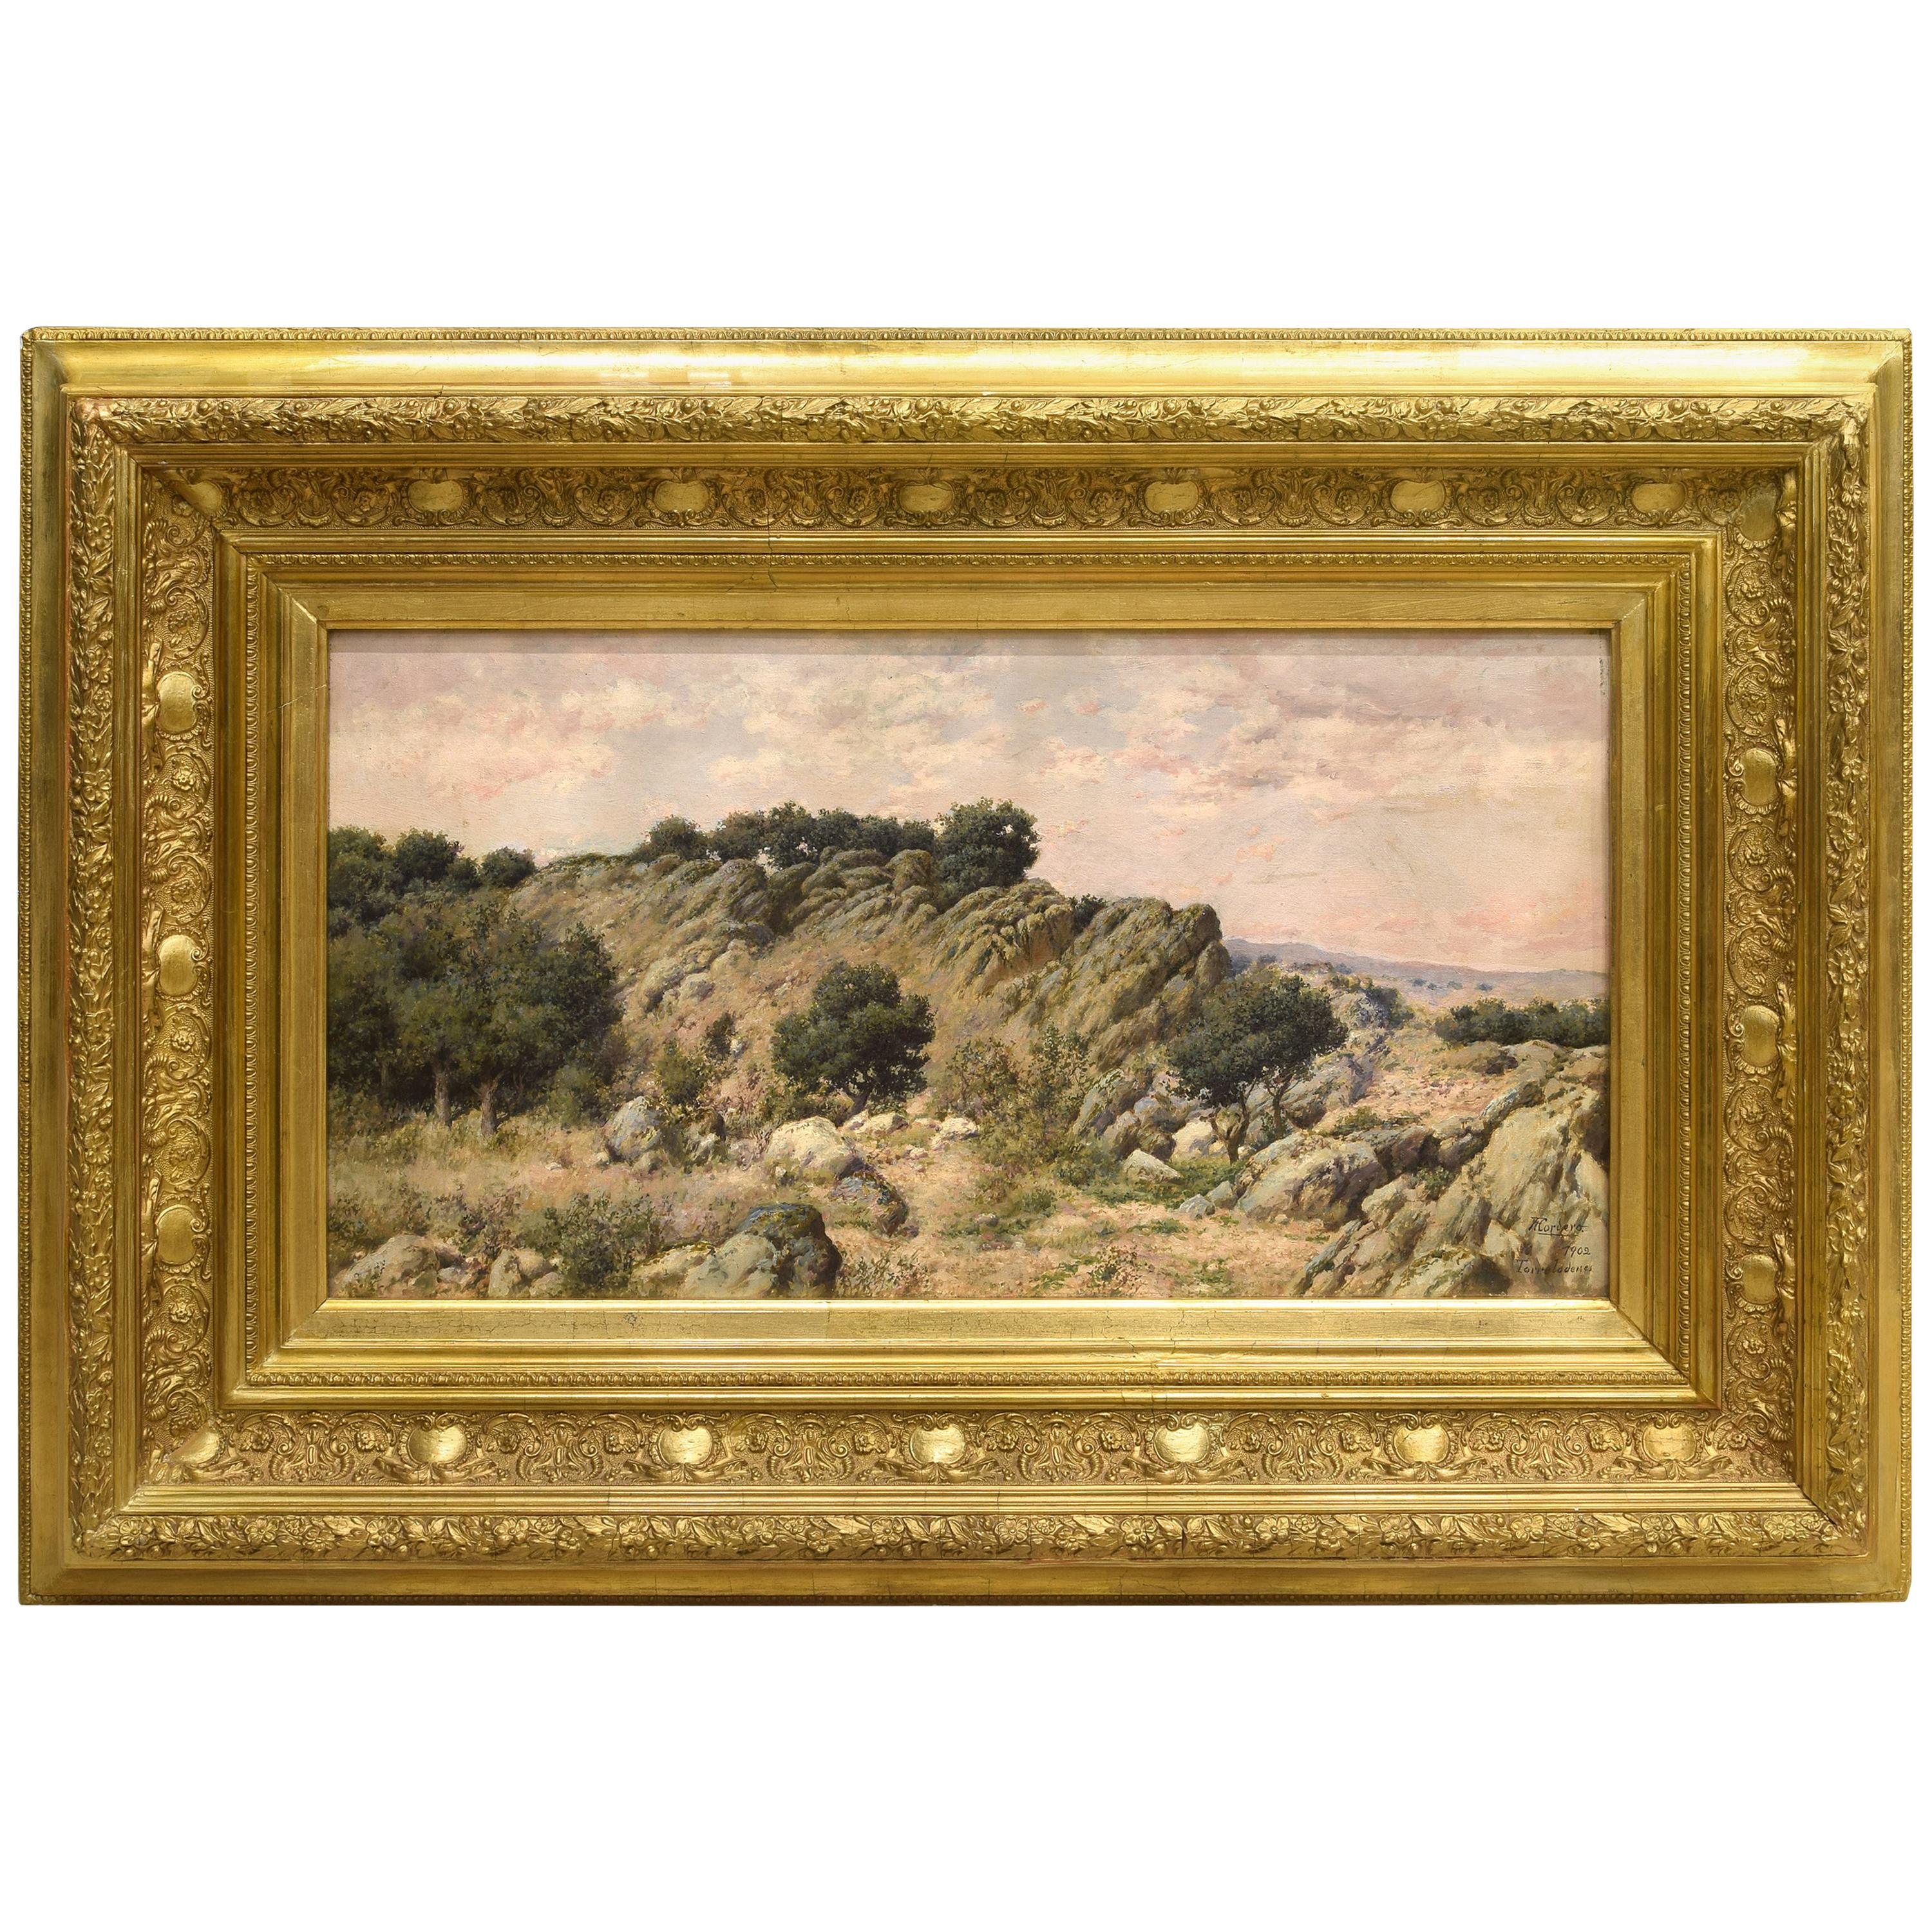 "Torrelodones landscape", Oil on Canvas, José Franco Cordero